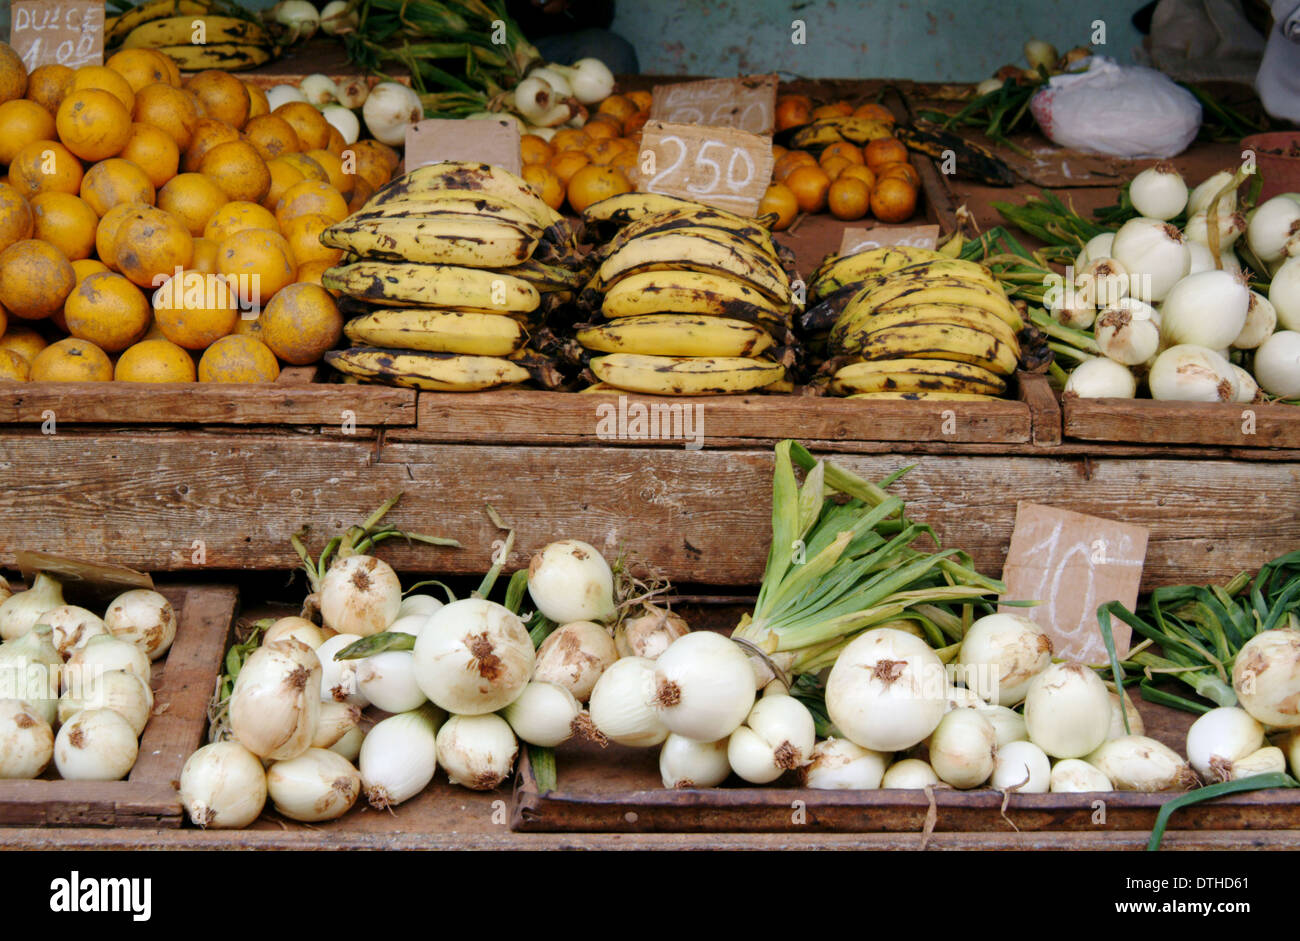 Un étal de fruits et légumes, La Havane, Cuba Banque D'Images